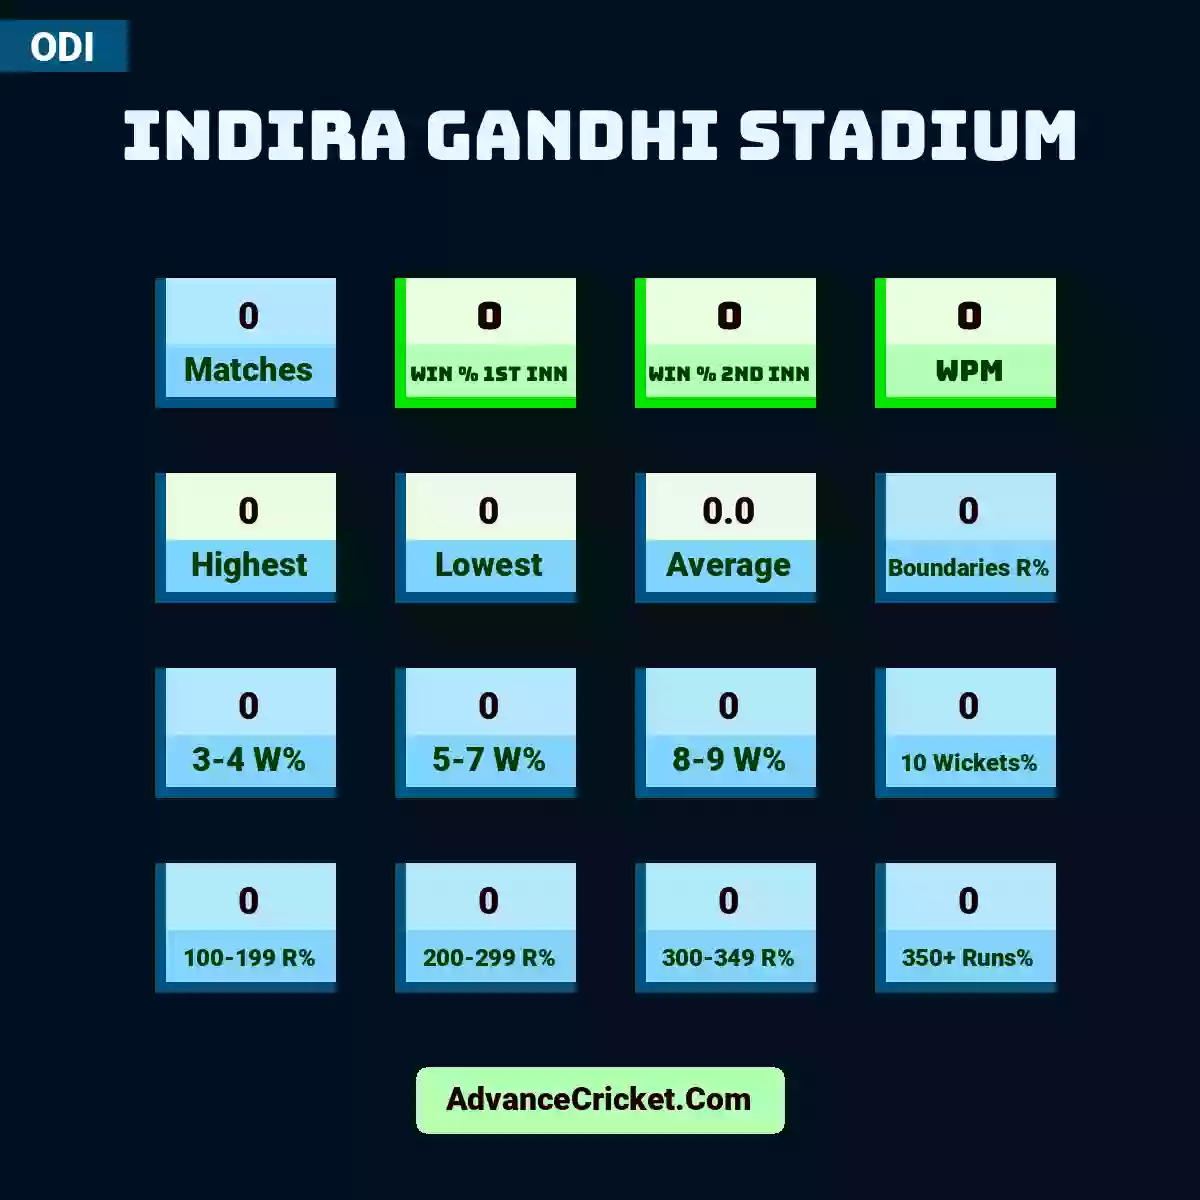 Image showing Indira Gandhi Stadium with Matches: 0, Win % 1st Inn: 0, Win % 2nd Inn: 0, WPM: 0, Highest: 0, Lowest: 0, Average: 0.0, Boundaries R%: 0, 3-4 W%: 0, 5-7 W%: 0, 8-9 W%: 0, 10 Wickets%: 0, 100-199 R%: 0, 200-299 R%: 0, 300-349 R%: 0, 350+ Runs%: 0.